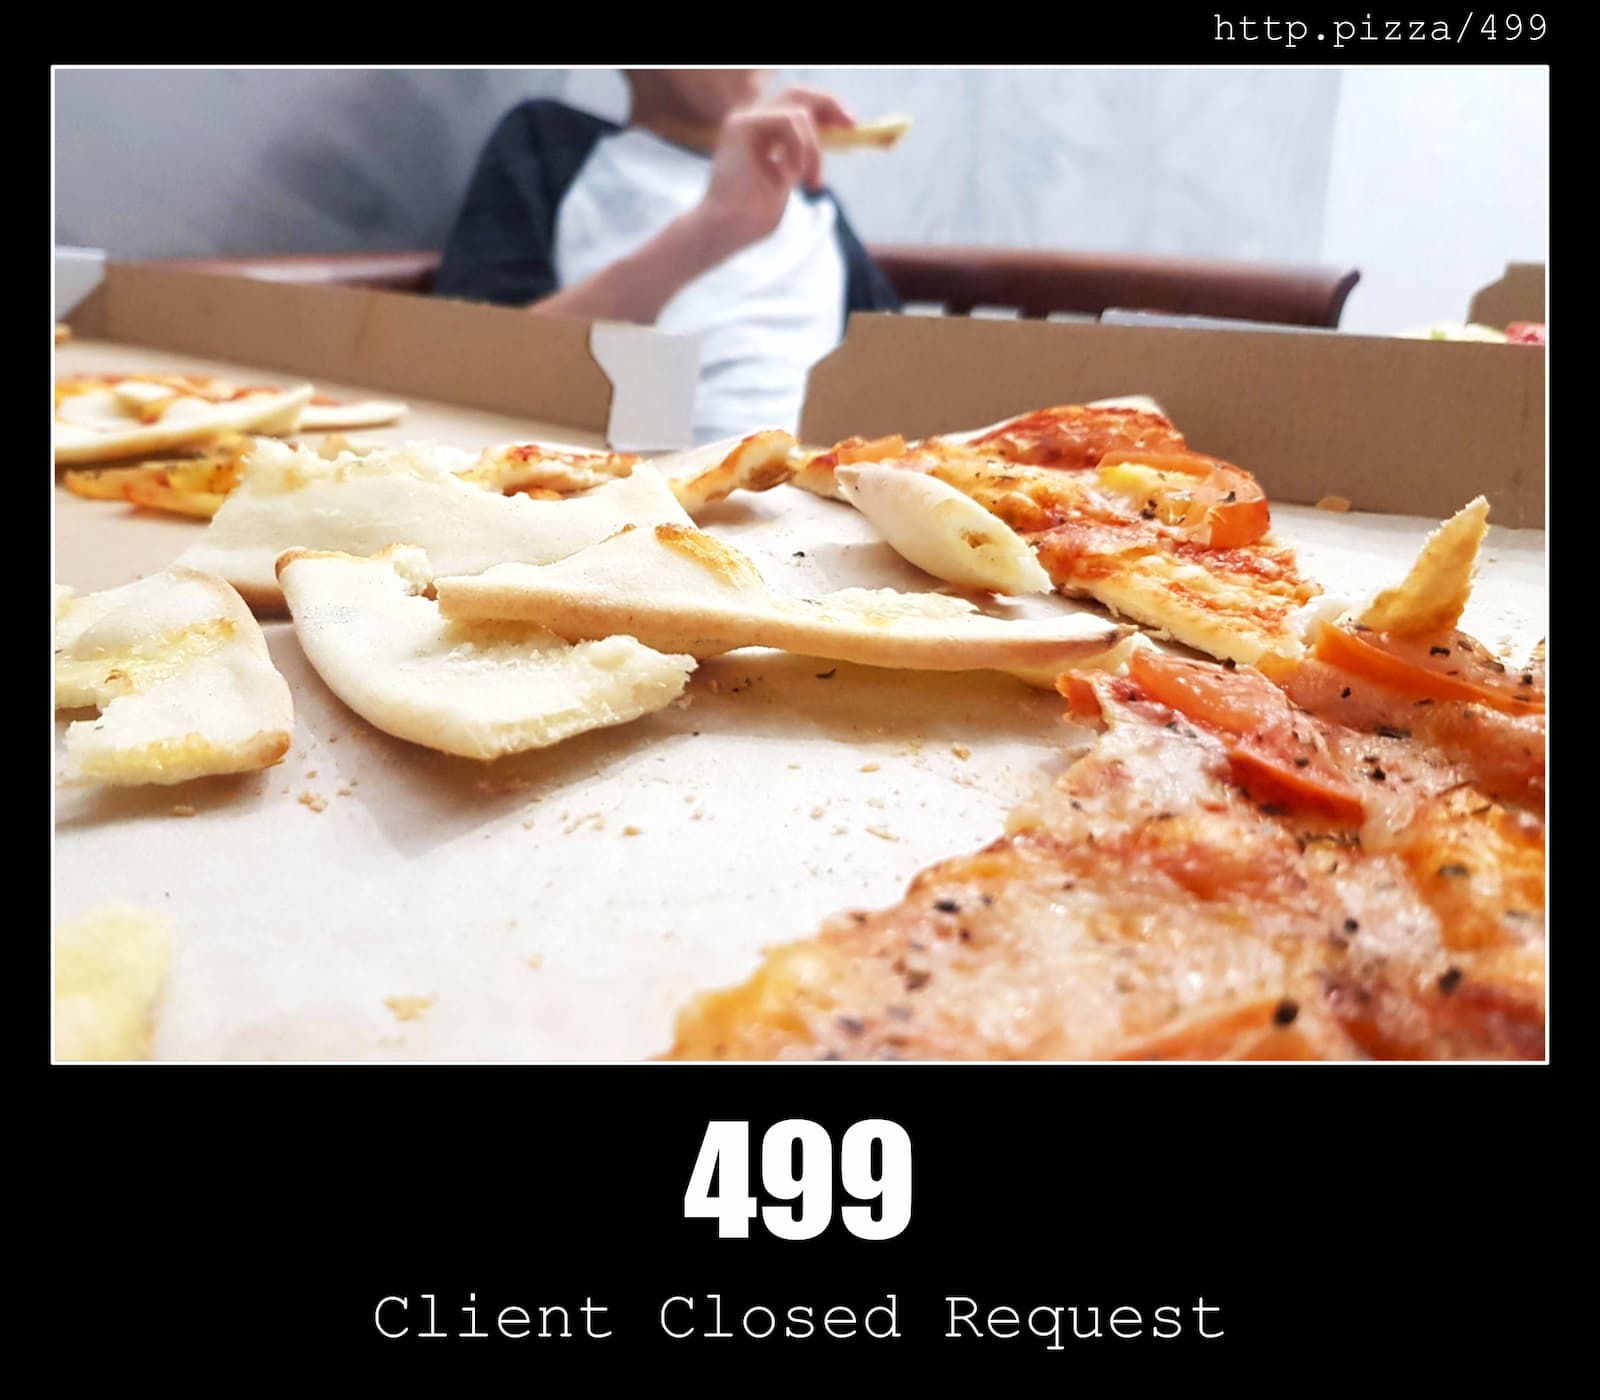 HTTP Status Code 499 Client Closed Request & Pizzas